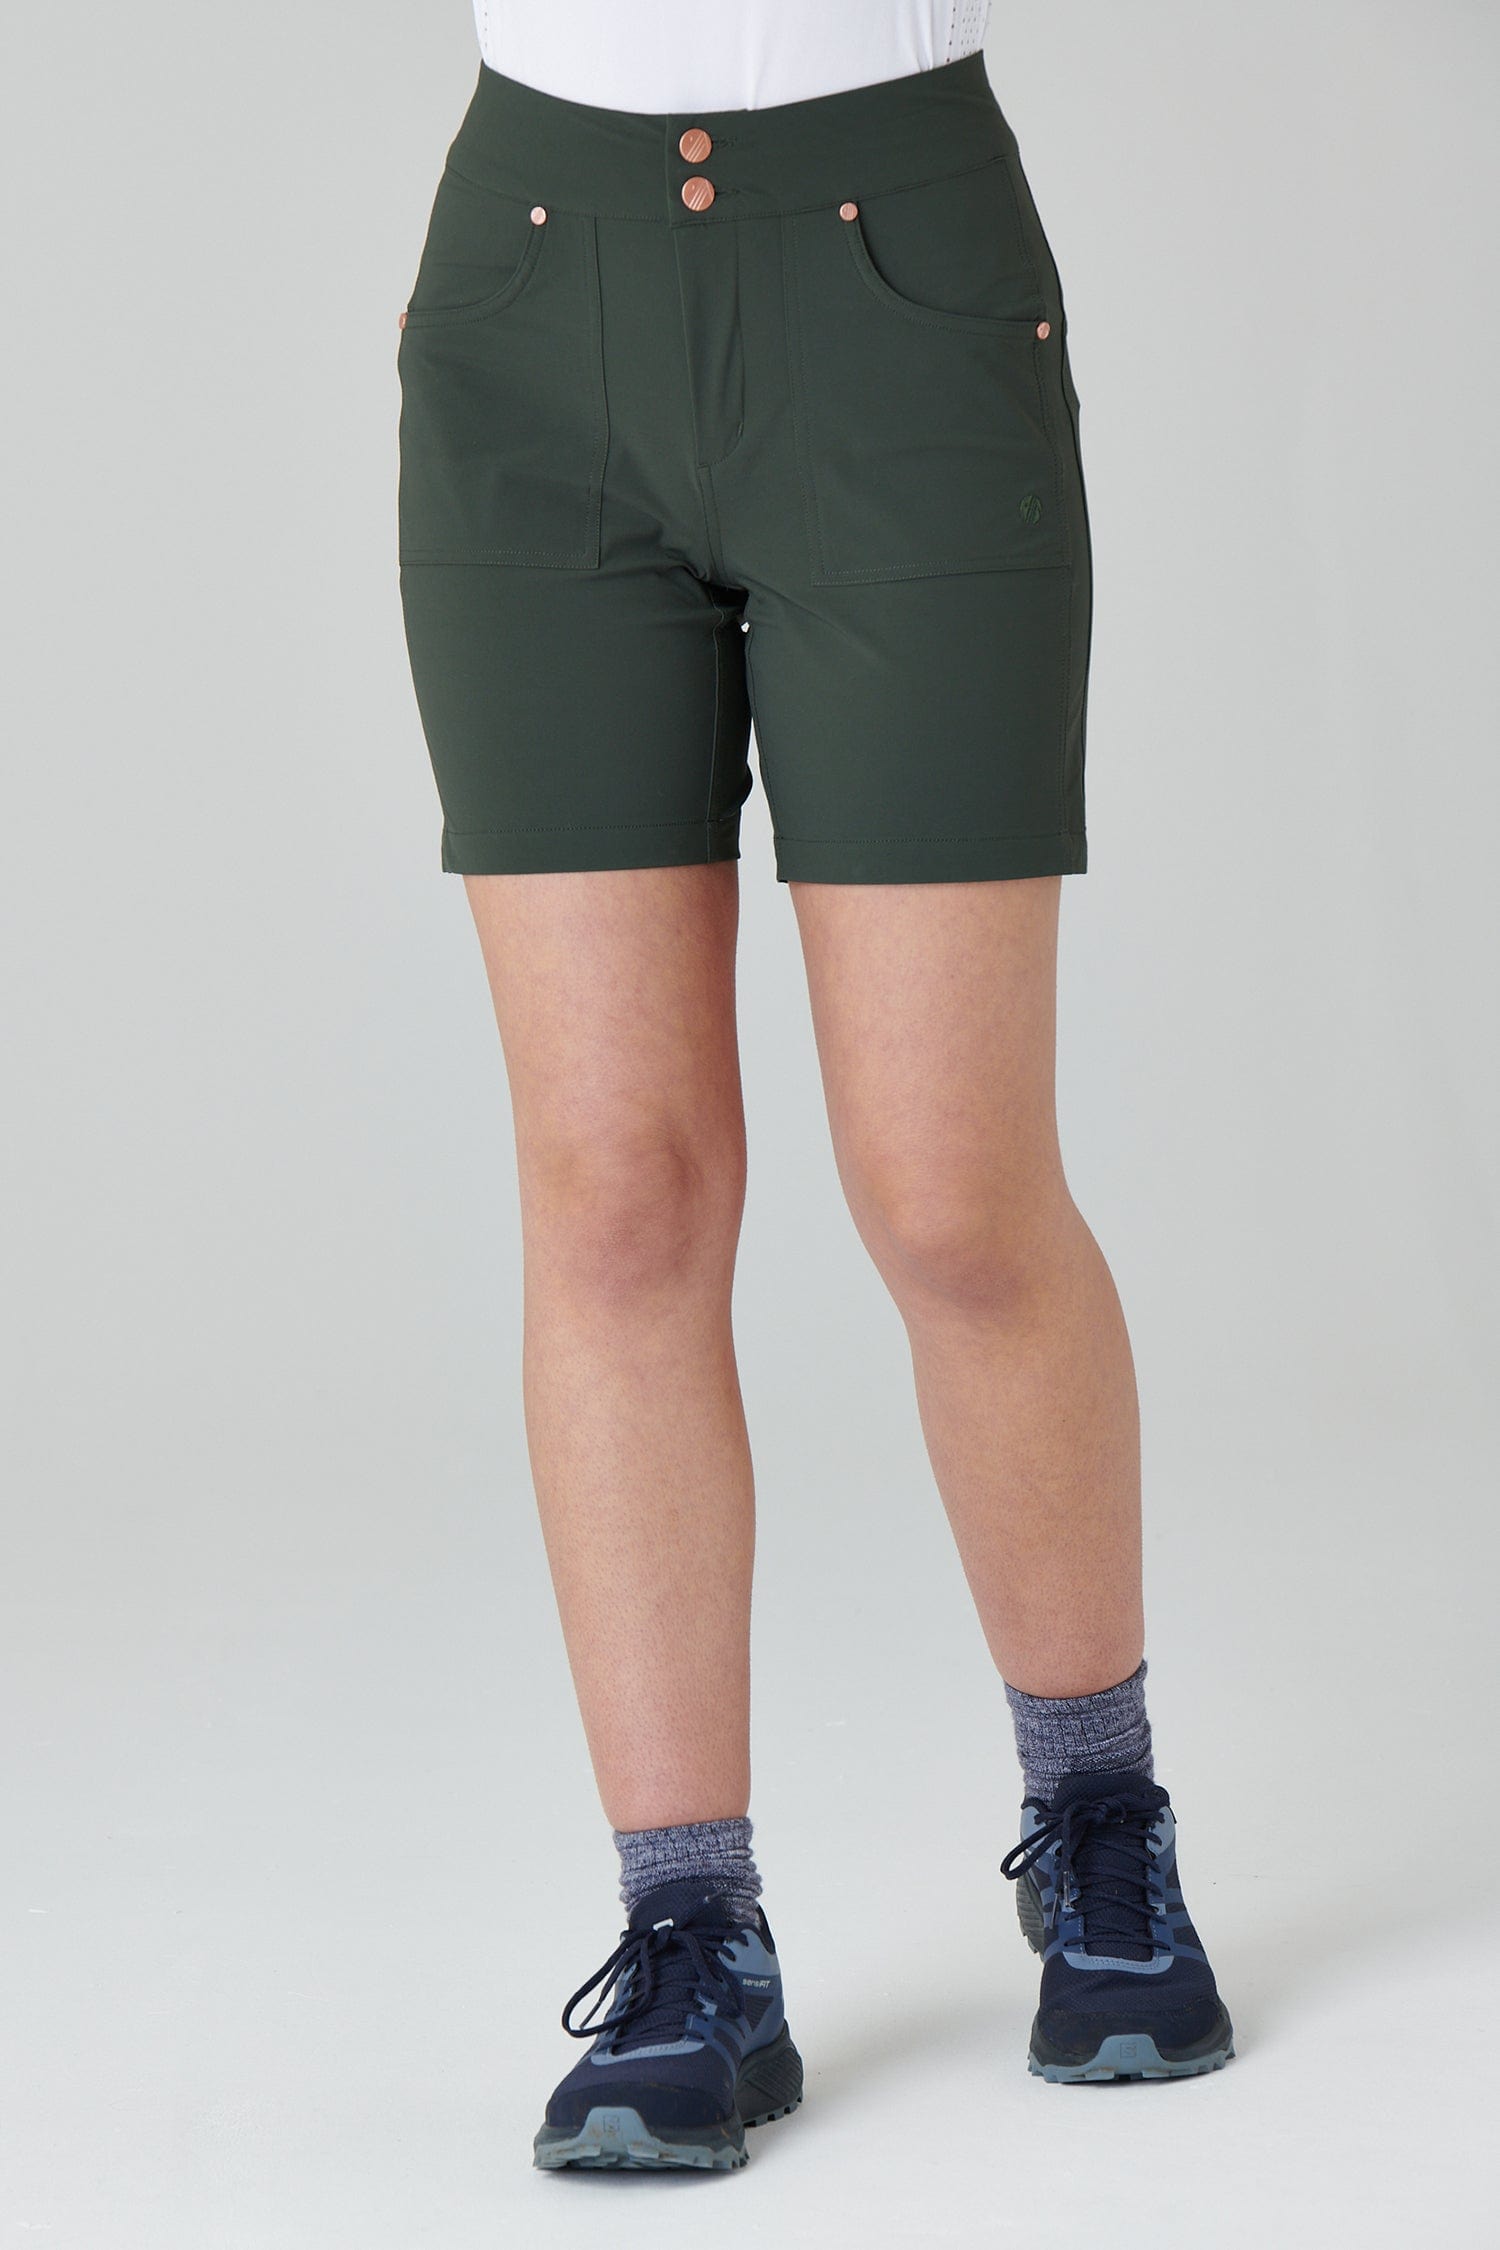 Mid Length Trek Shorts - Deep Khaki - 34 / Uk16 - Womens - Acai Outdoorwear